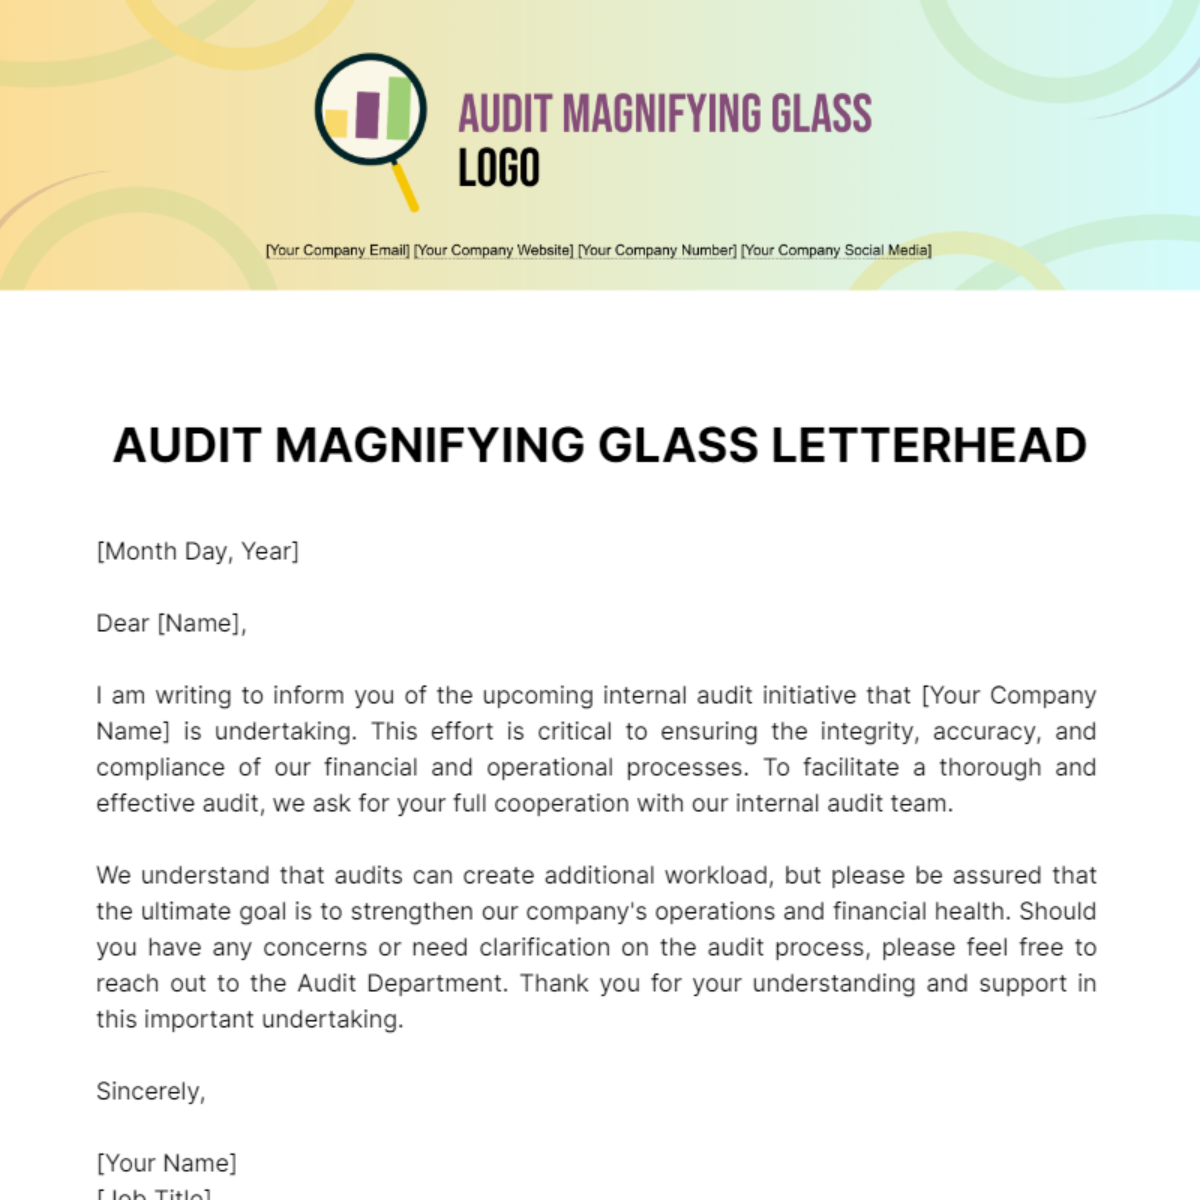 Audit Magnifying Glass Letterhead Template